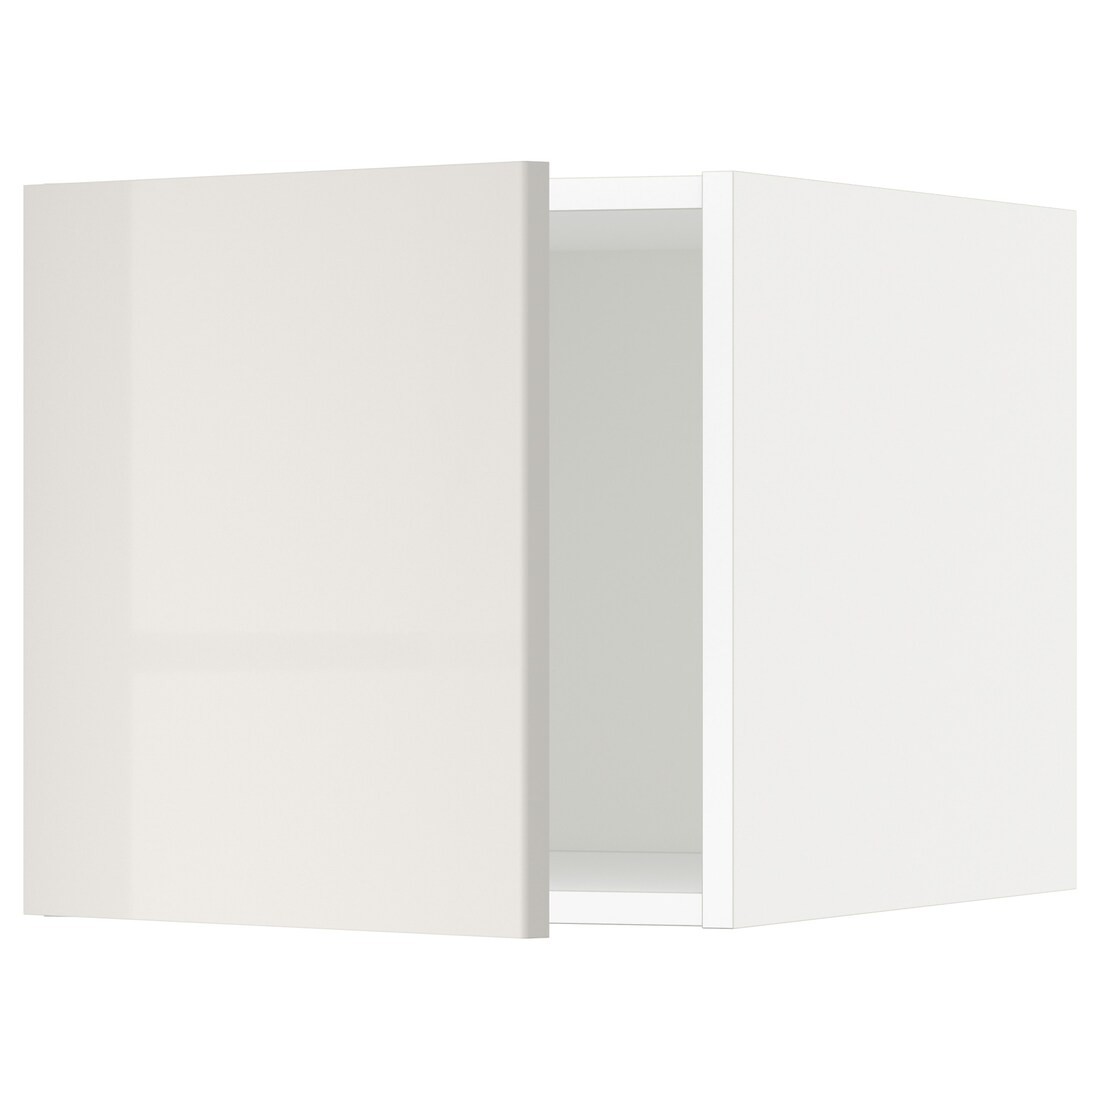 IKEA METOD МЕТОД Надставка, белый / Ringhult светло-серый, 40x40 см 09469385 | 094.693.85